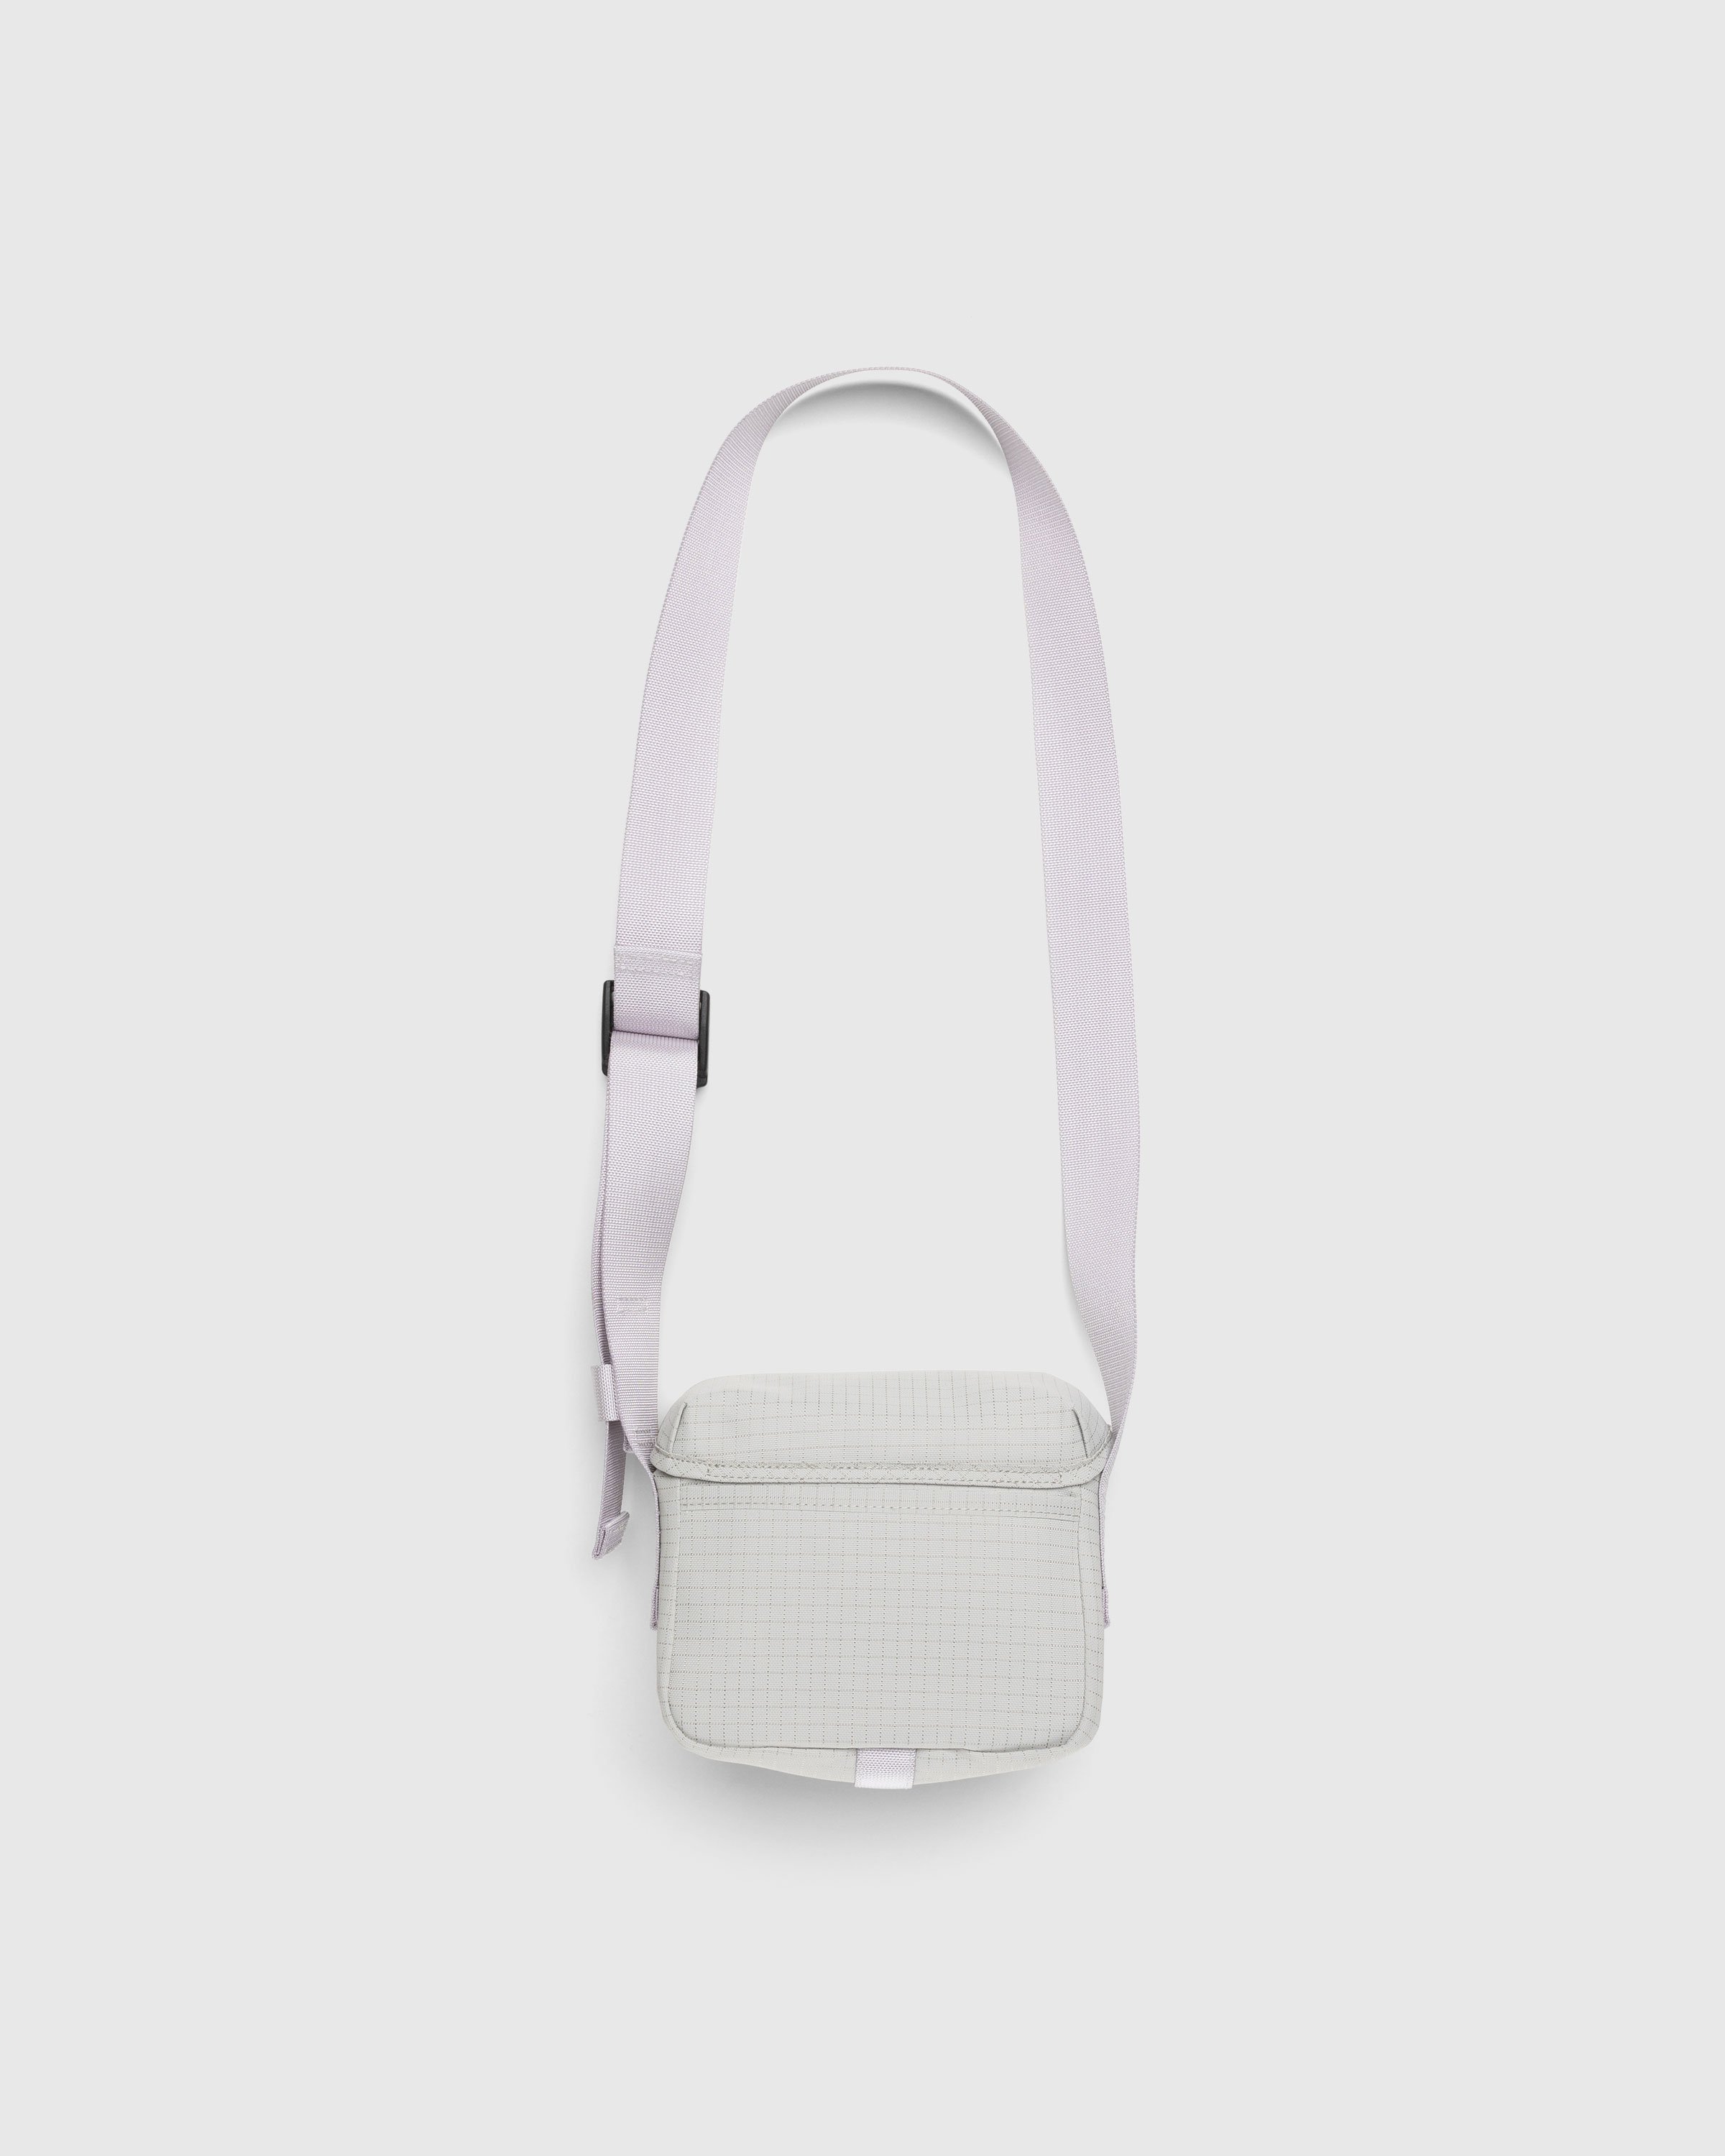 Acne Studios - Mini Messenger Bag Beige - Accessories - Beige - Image 2